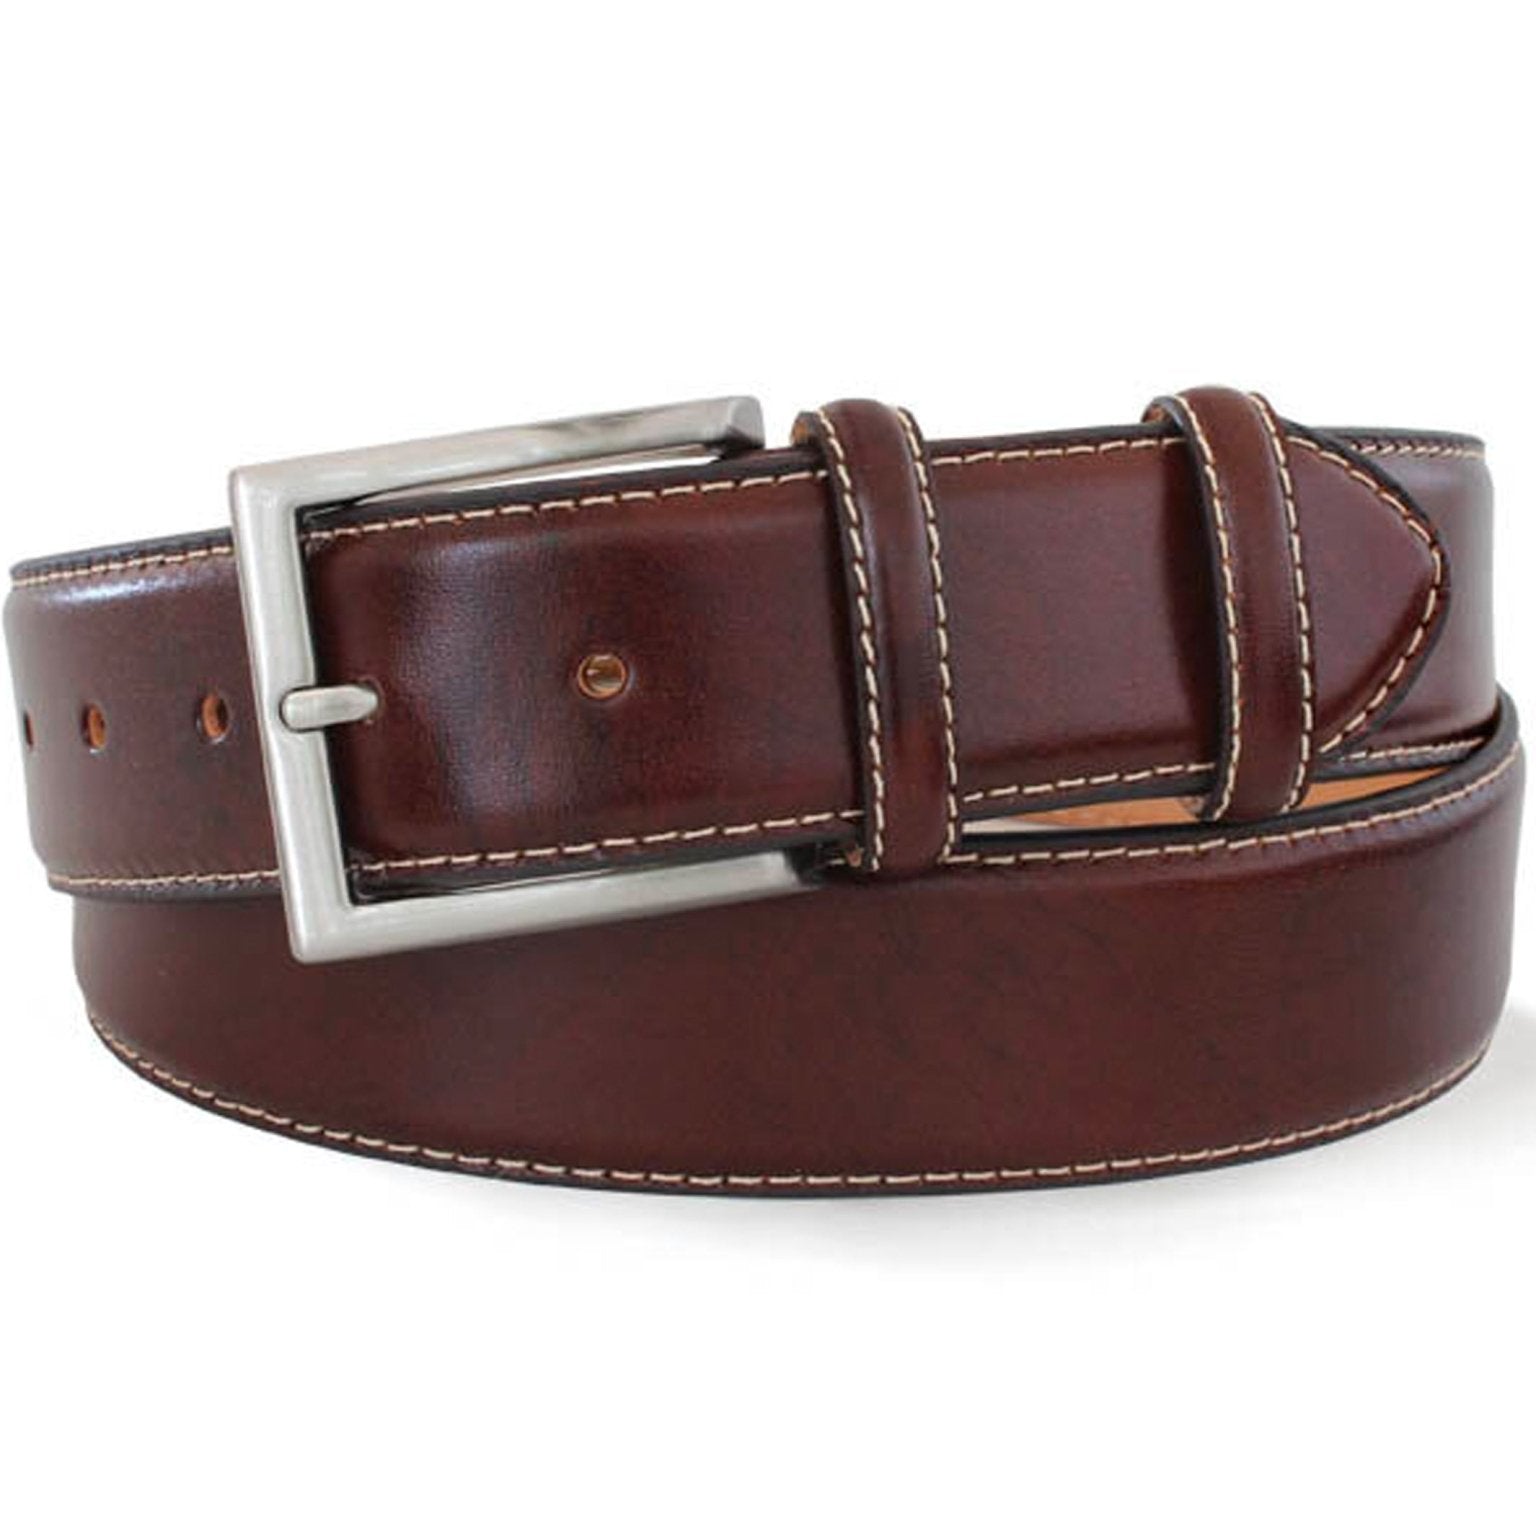 4elementsclothingRobert CharlesRobert Charles Belts - 1140 Mens Leather Belt Hand brushed 40mm width - Made in ItalyBelts1140/Brown/S